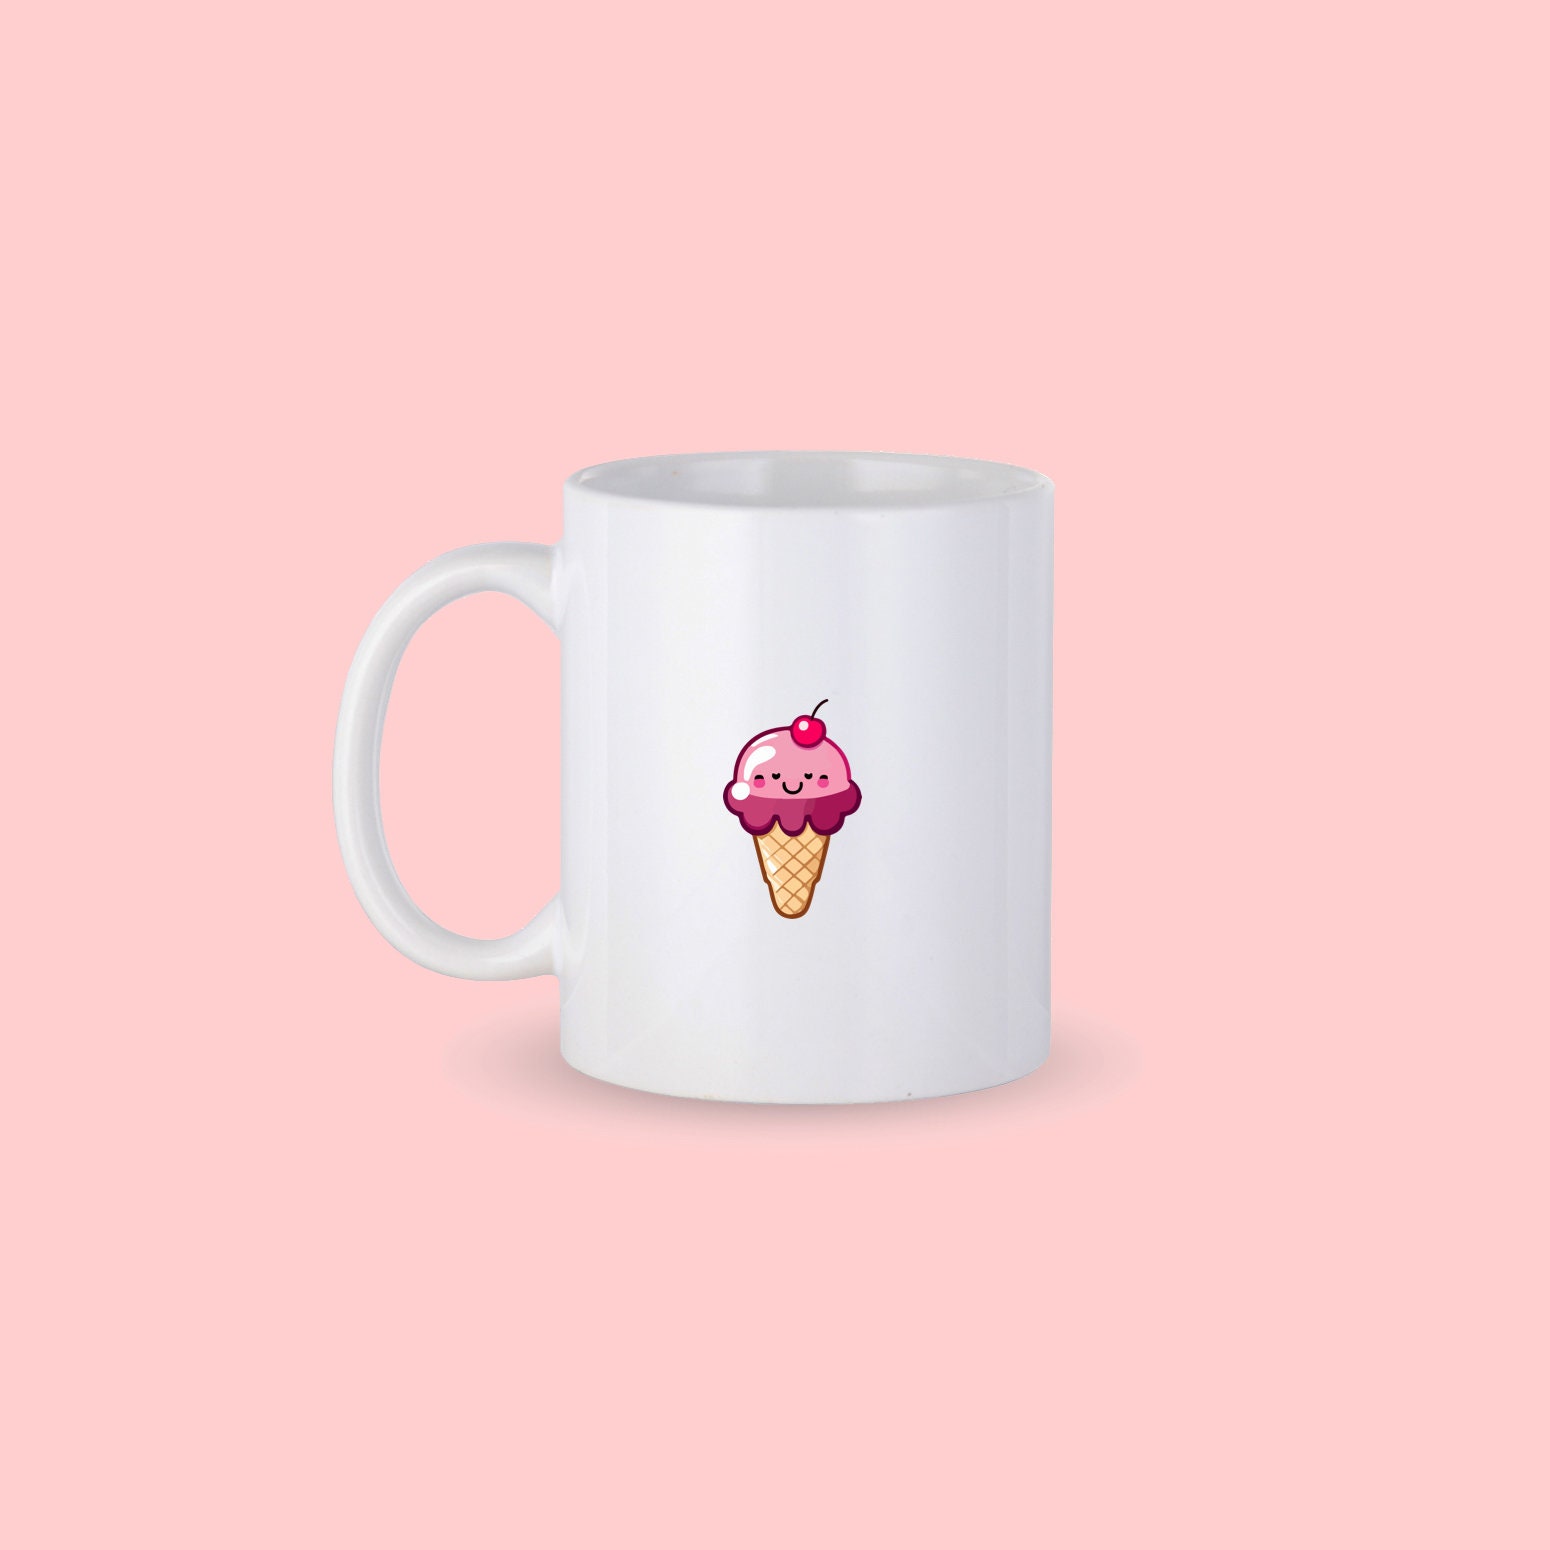  Ice Cream Cone Mug - Ice Cream Lover Coffee Mug - 11